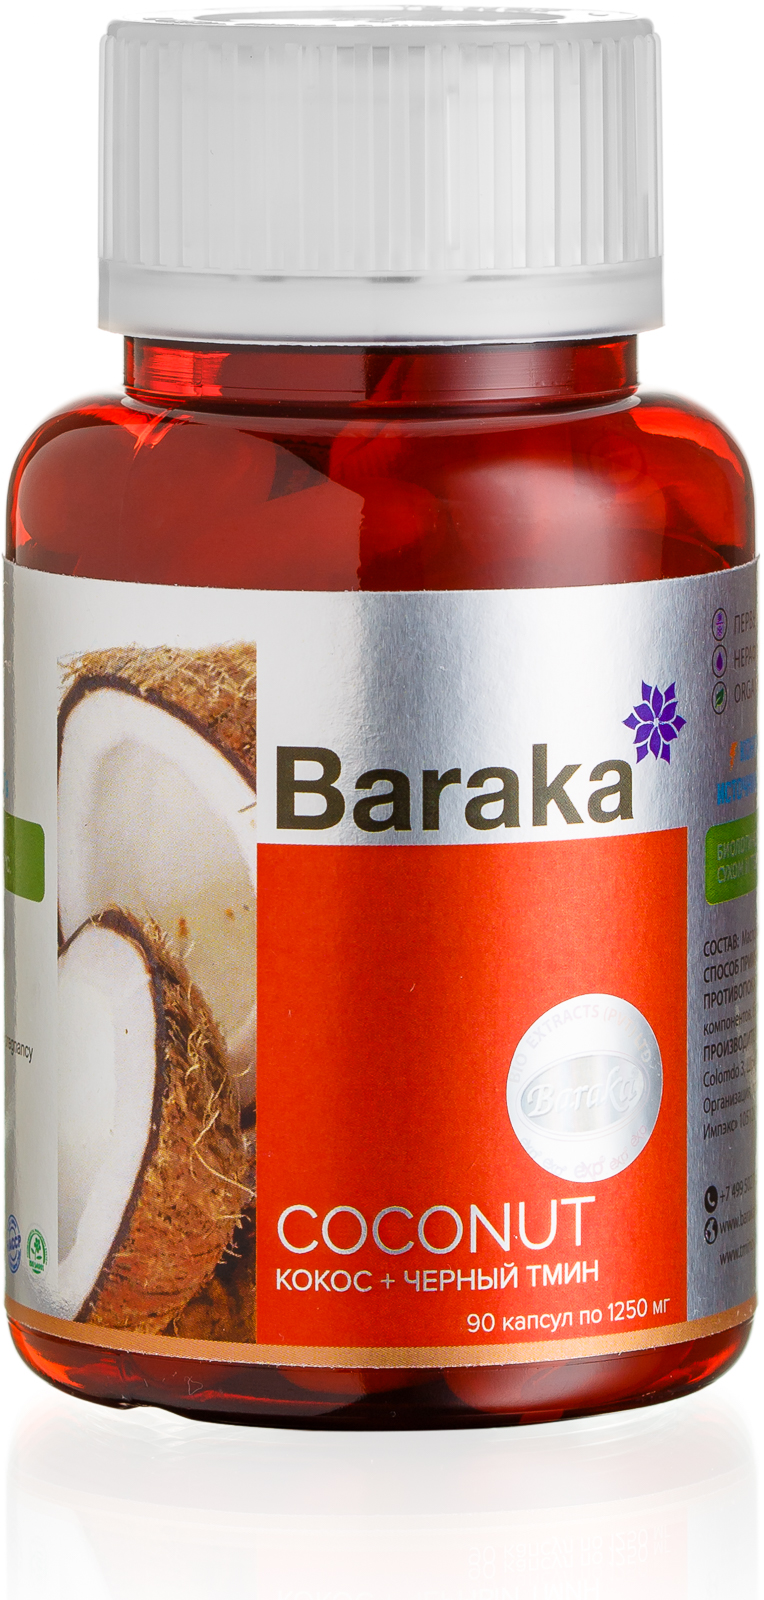 COCONUT кокос + чёрный тмин, Baraka, 90 капс. по 1250 мг.